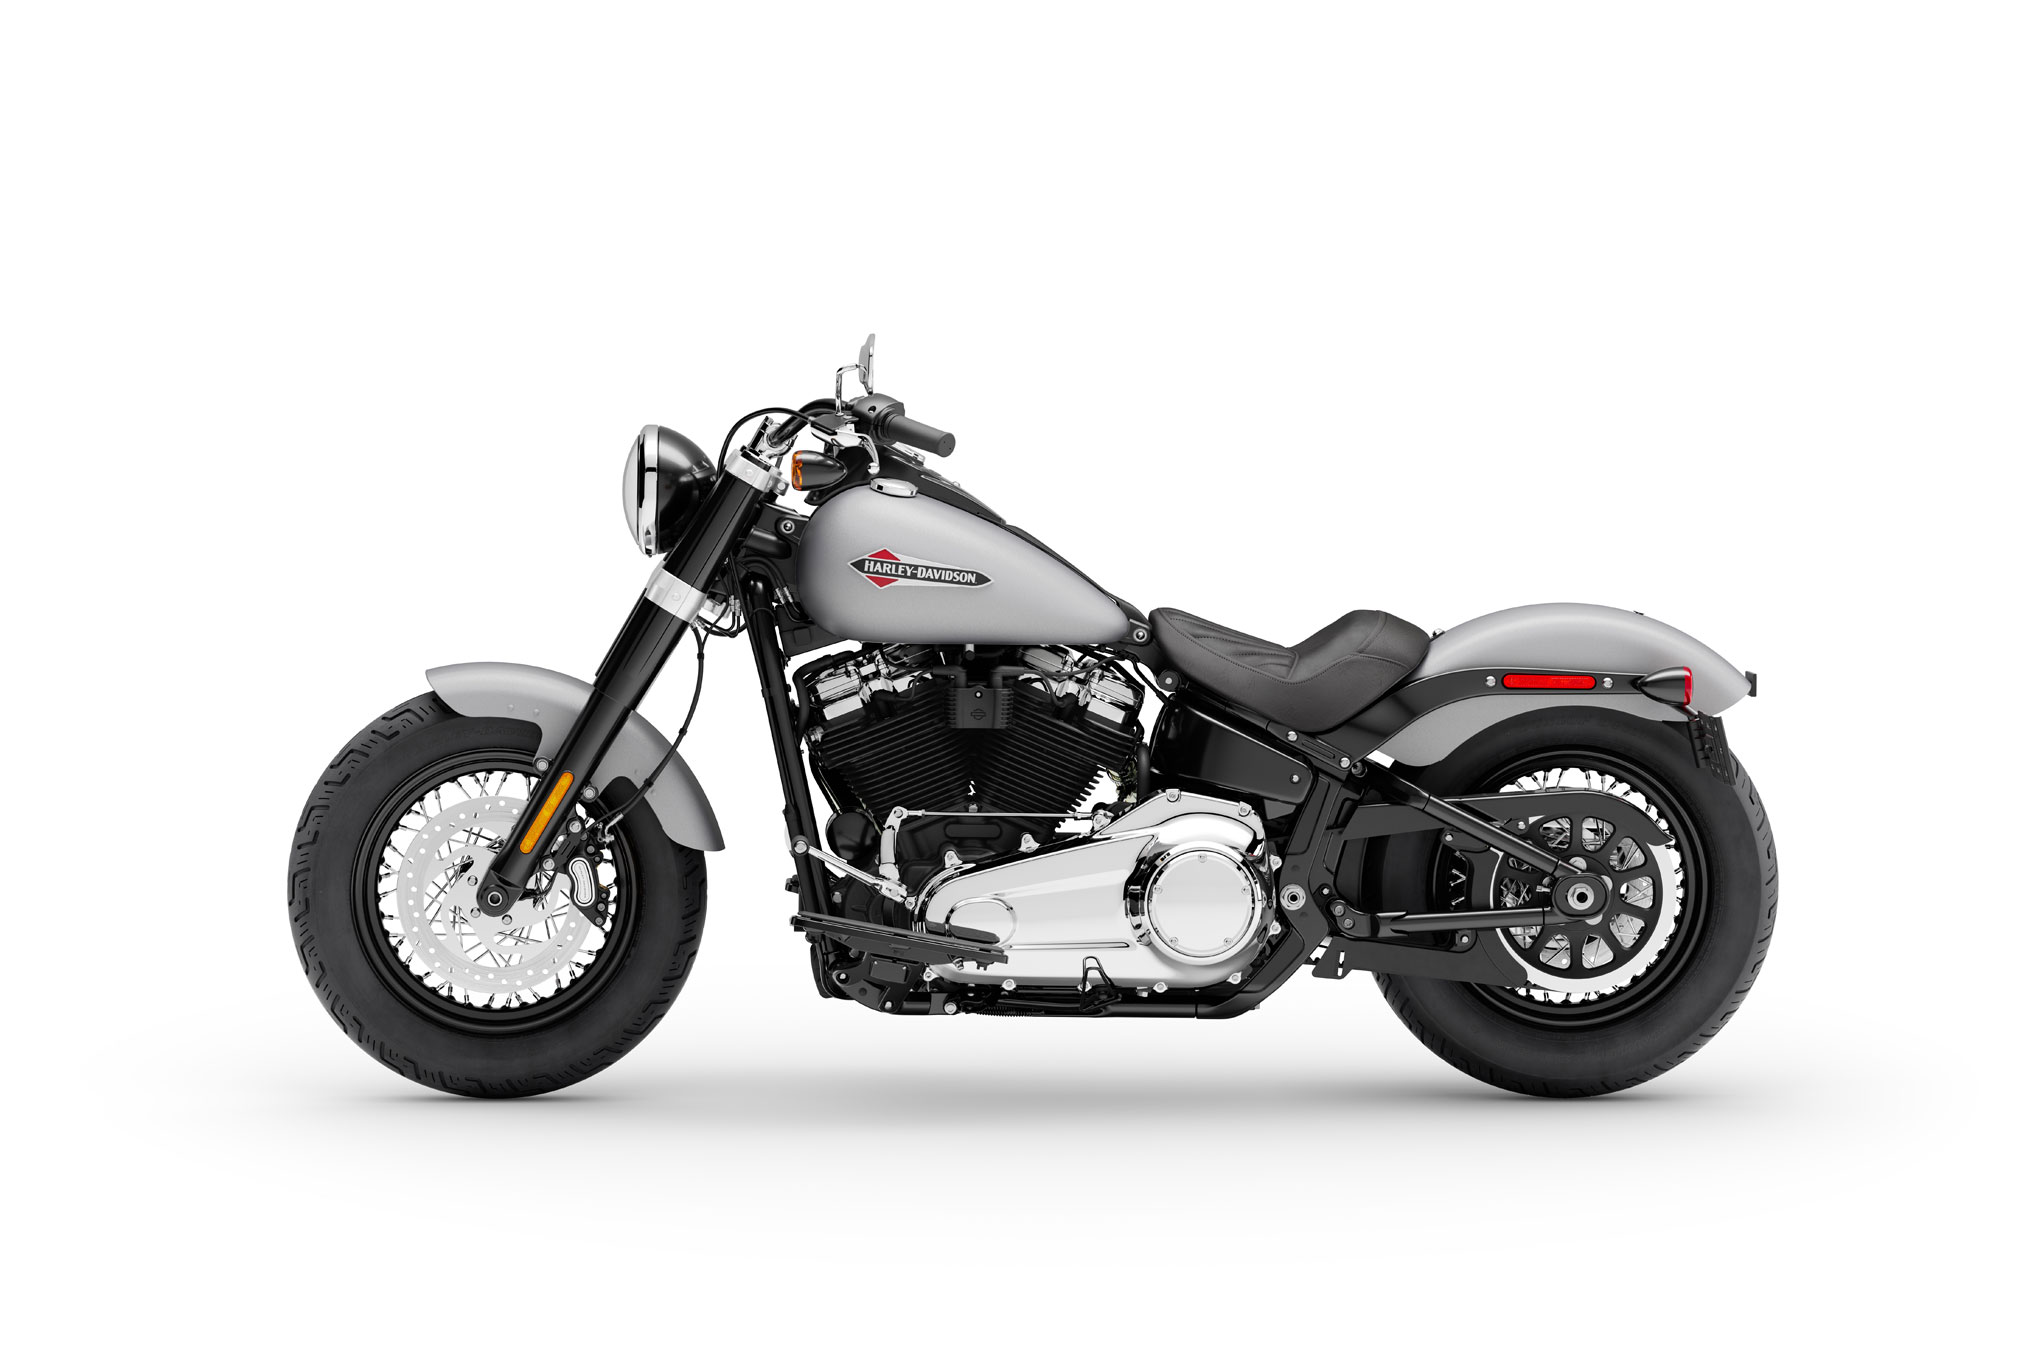  2020  Harley  Davidson  Softail  Slim  Guide  Total Motorcycle